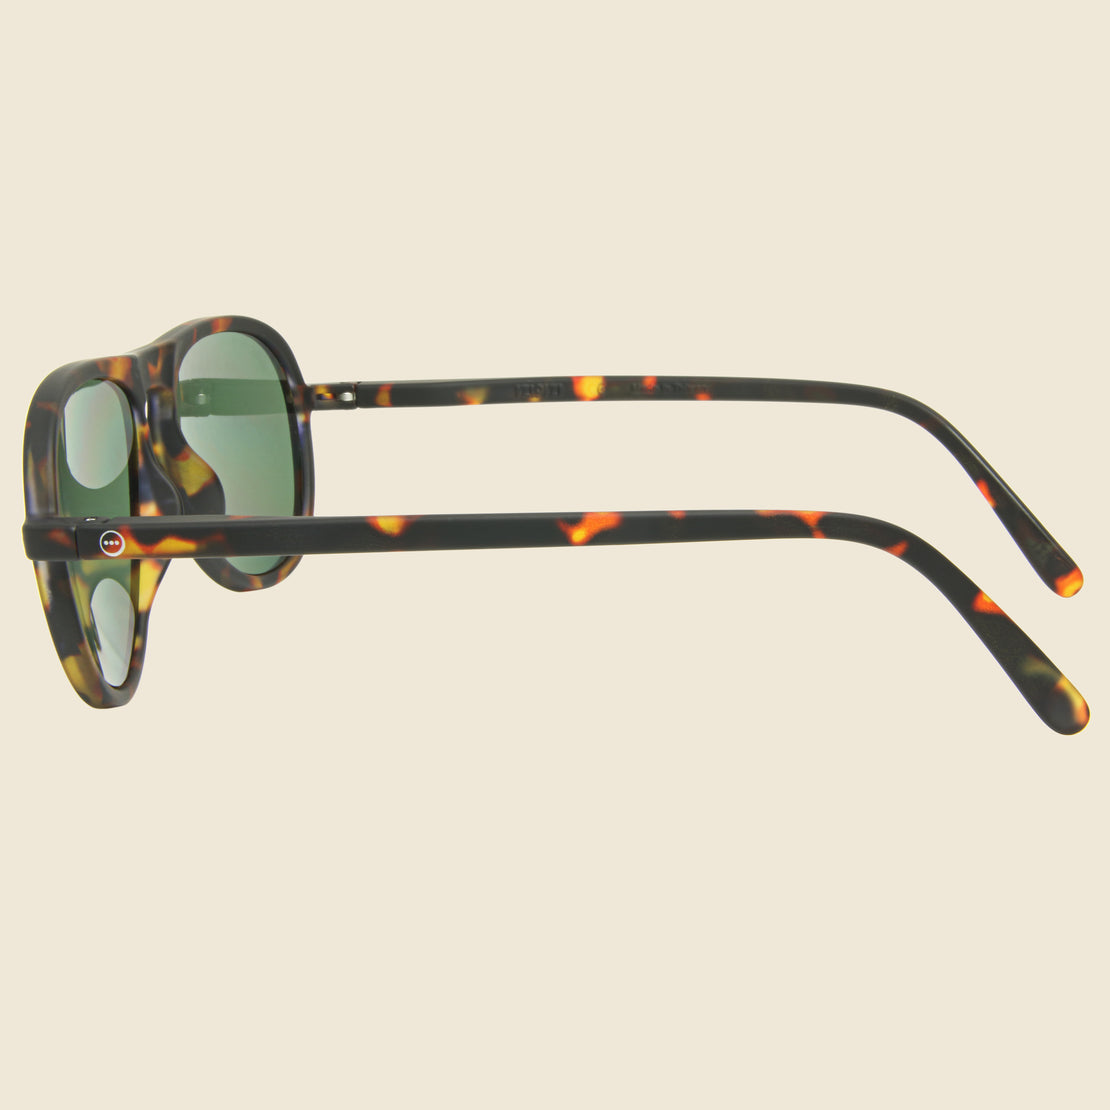 The Aviator #I - Tortoise/Green Lens - Izipizi - STAG Provisions - Accessories - Eyewear